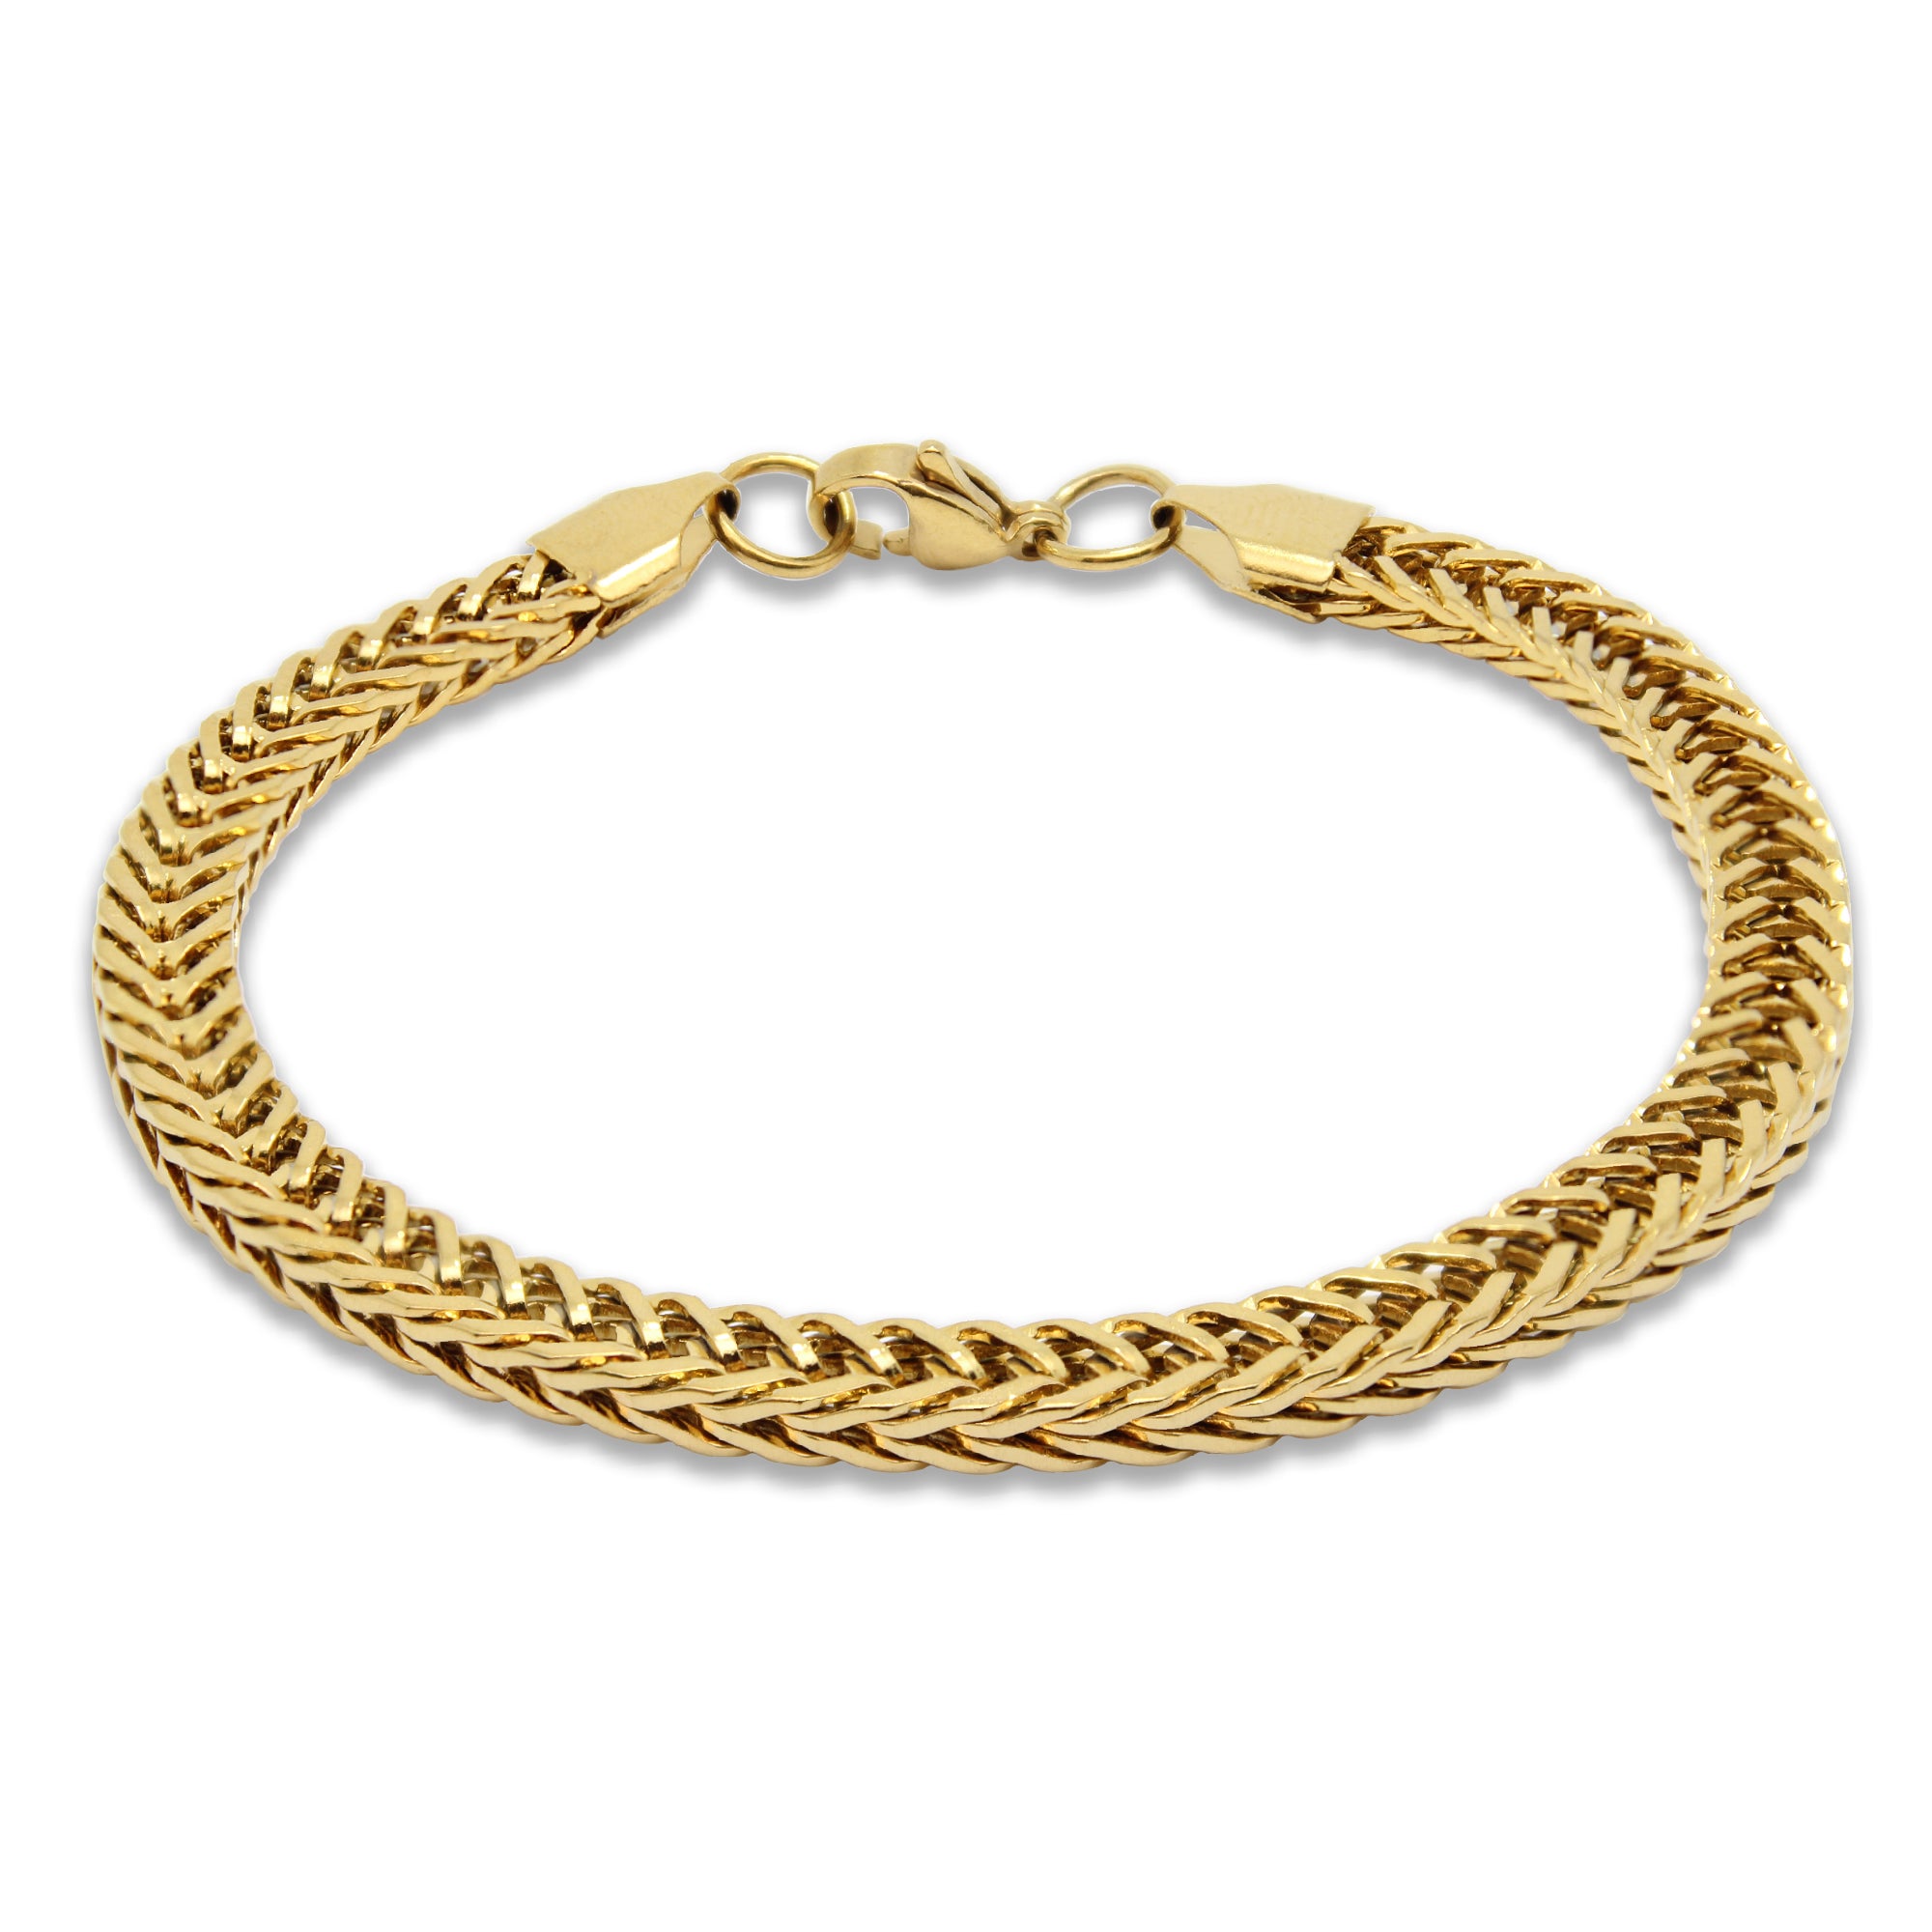 5.5mm 925 sterling silver handmade snake chain bracelet, D shape chain  bracelet, half round snake chain bracelet stylish jewelry sbr261 | TRIBAL  ORNAMENTS